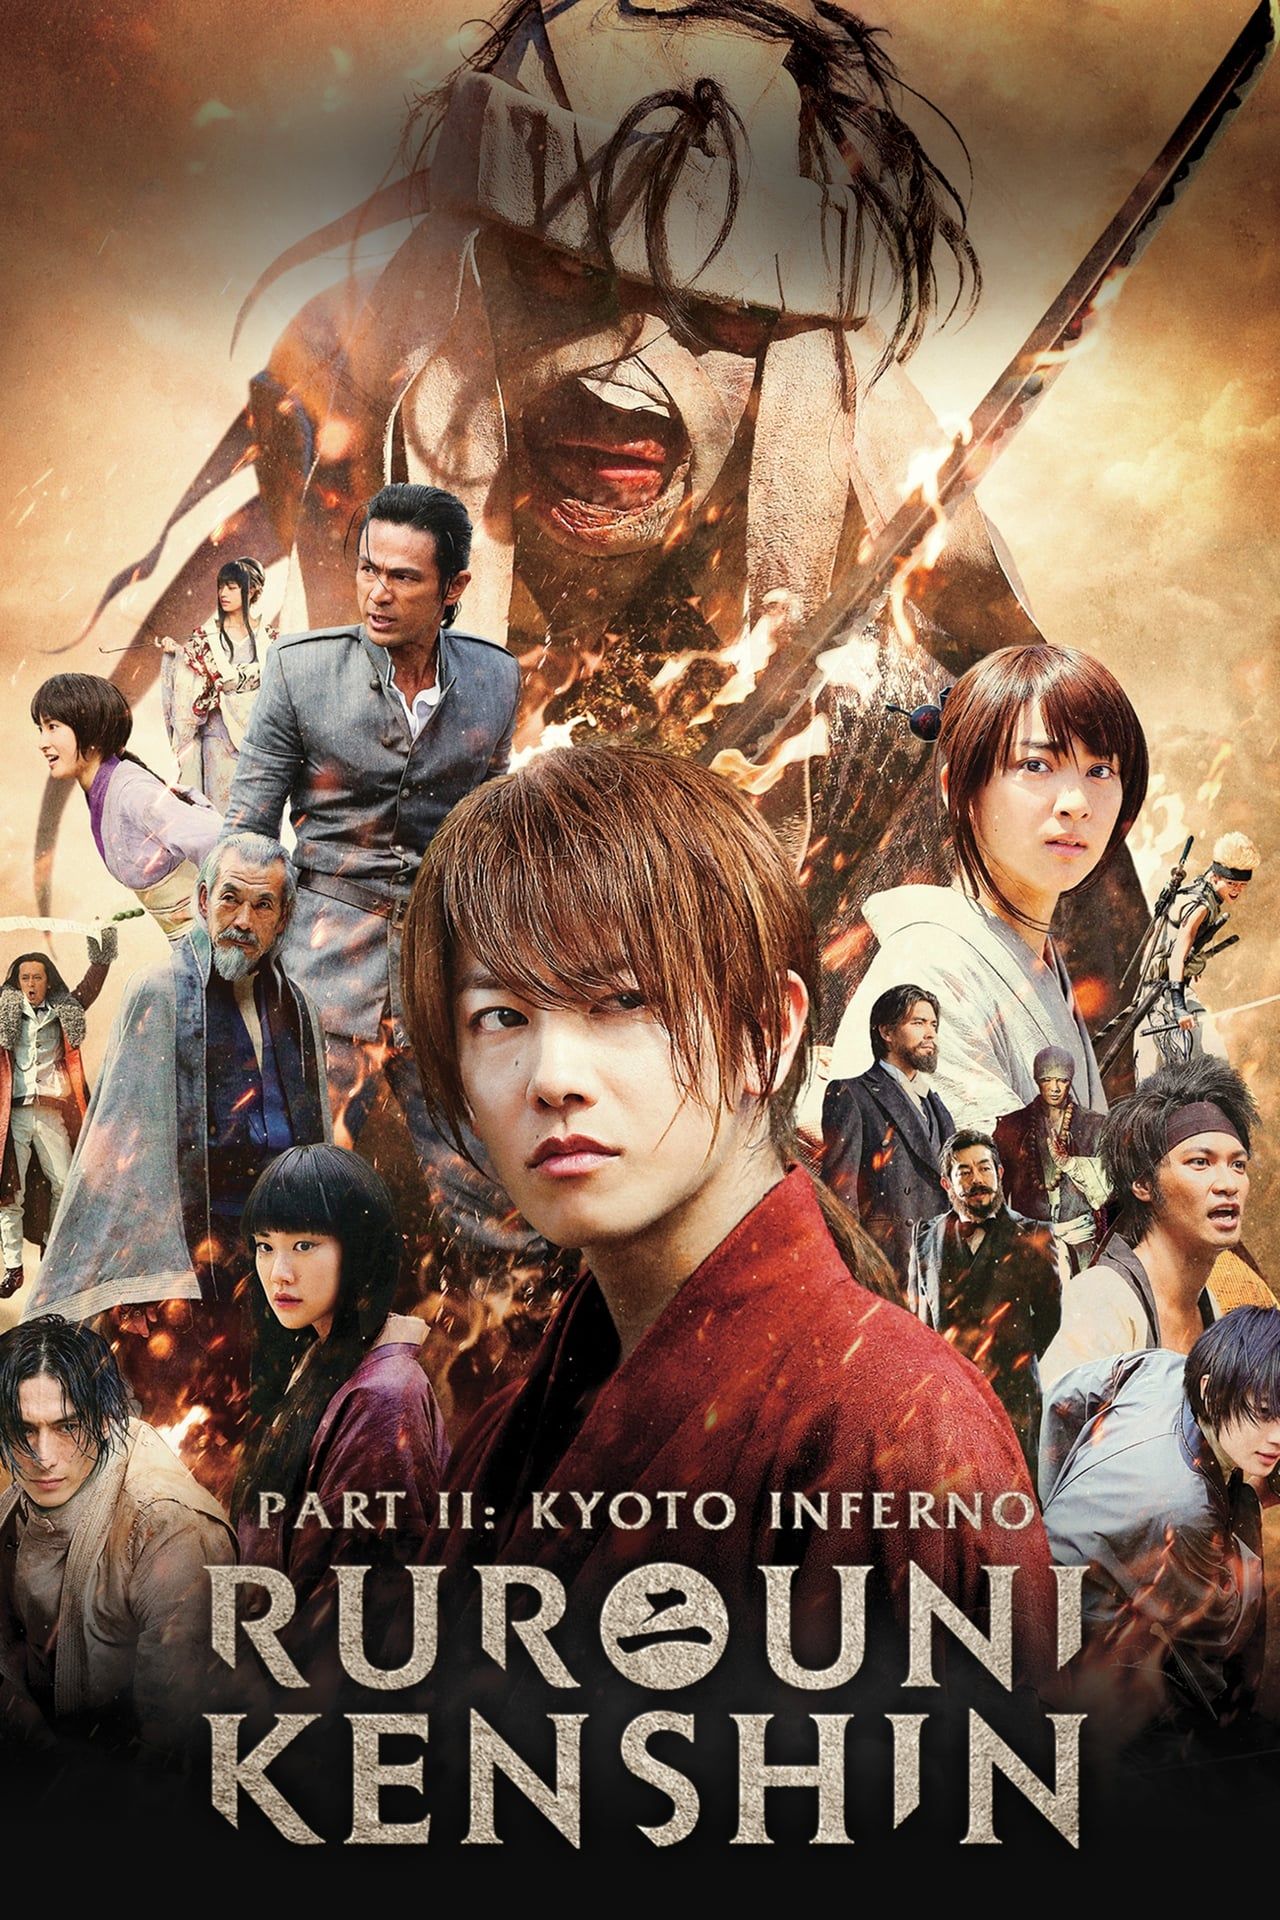 Rurouni Kenshin Part II Kyoto Inferno (2014) Hindi Dubbed Movie